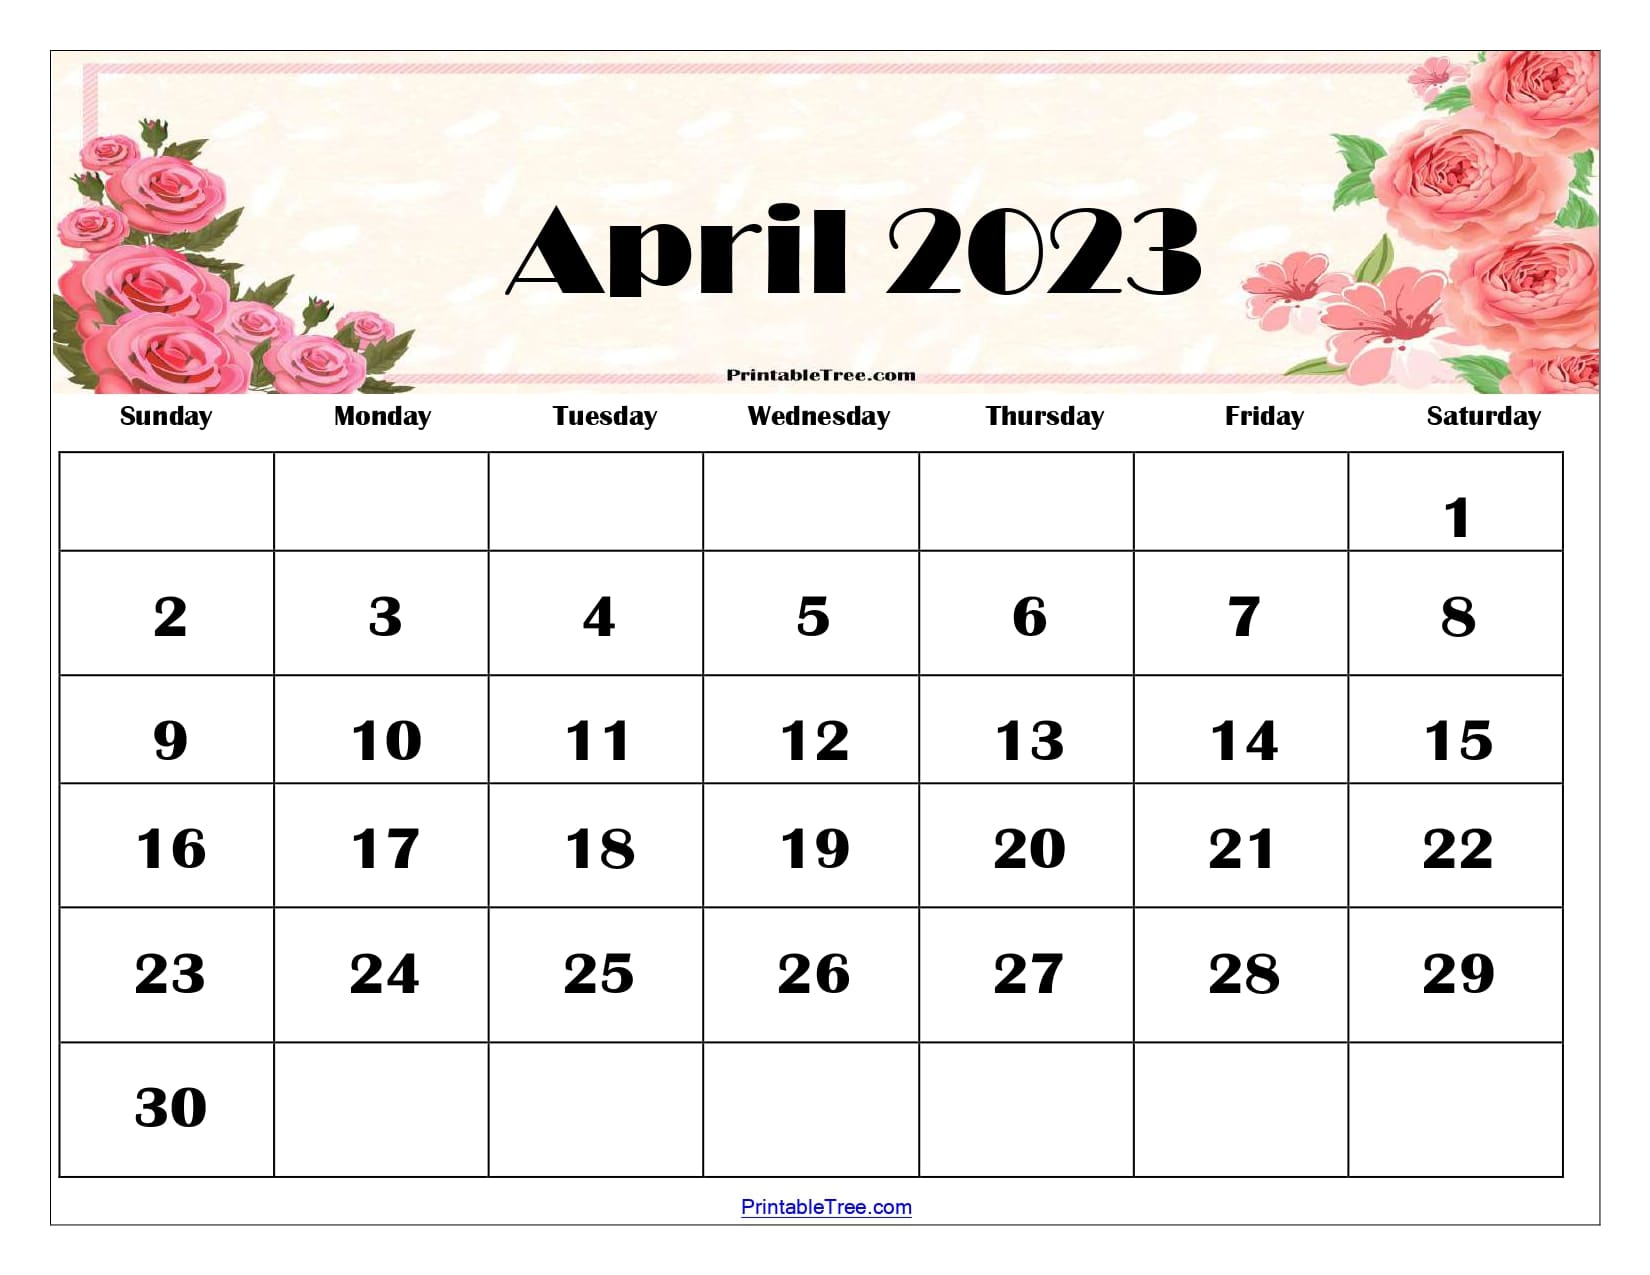 April 2023 Floral Calendar Printable 